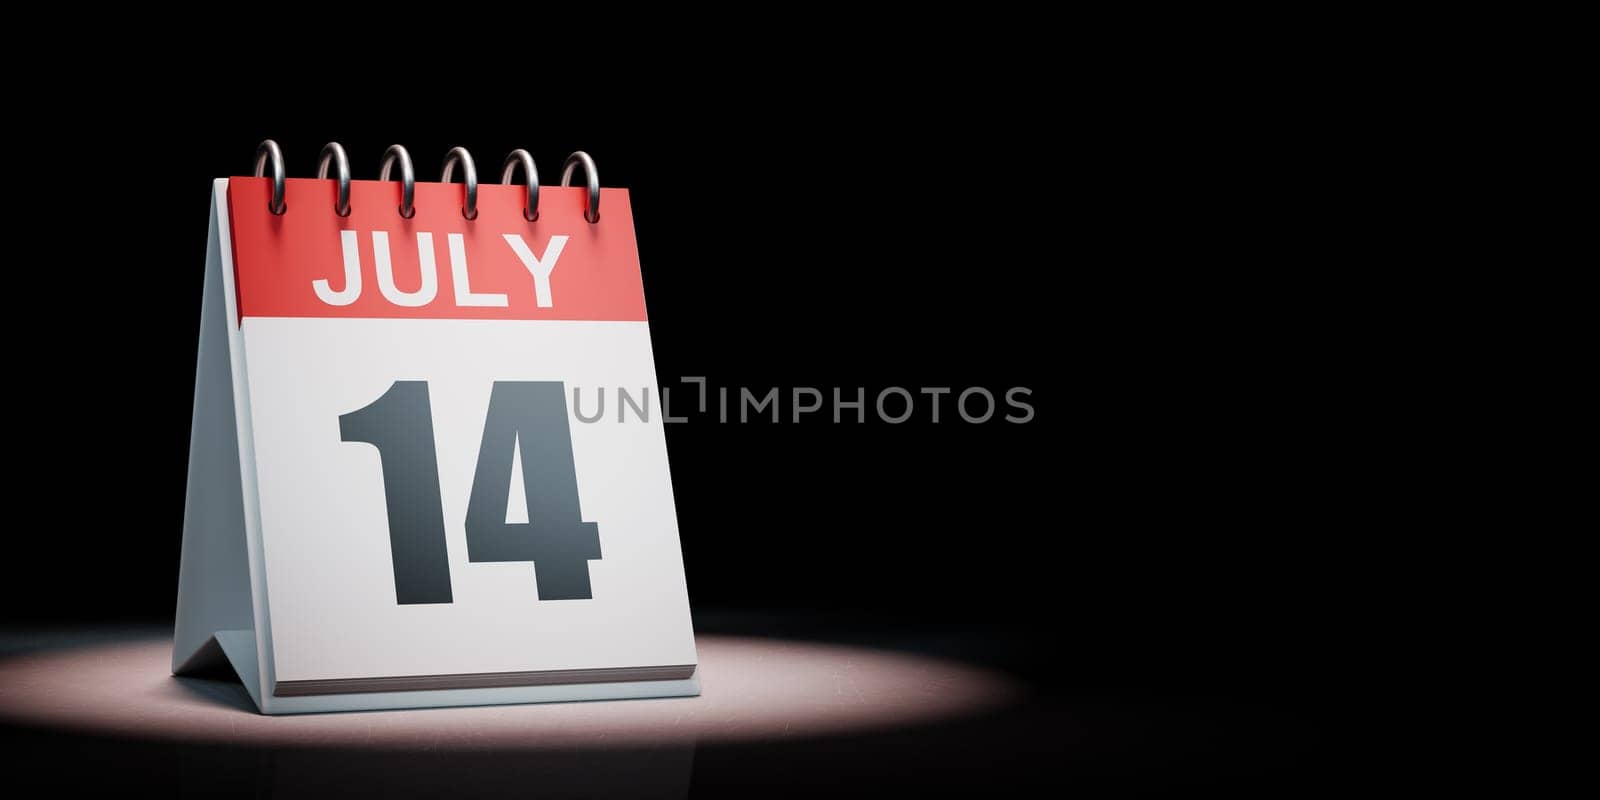 July 14 Calendar Spotlighted on Black Background by make